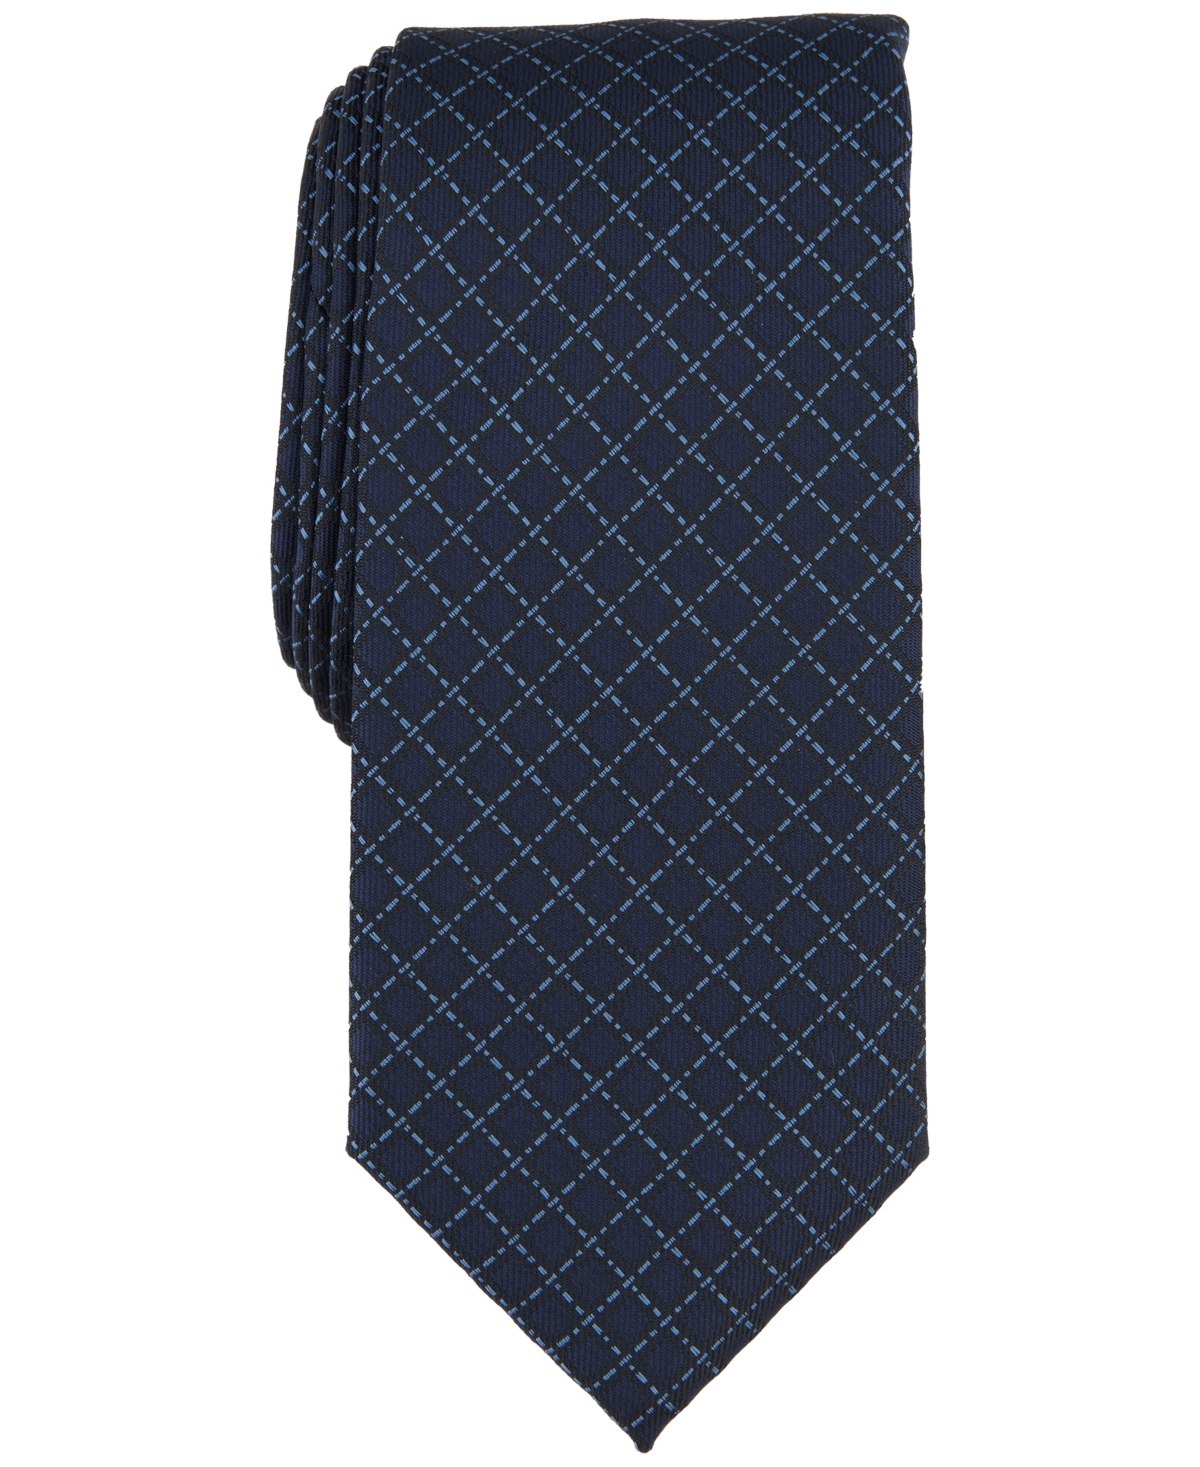 Men's Sonora Diamond-Pattern Tie, Created for Macy's - Navy